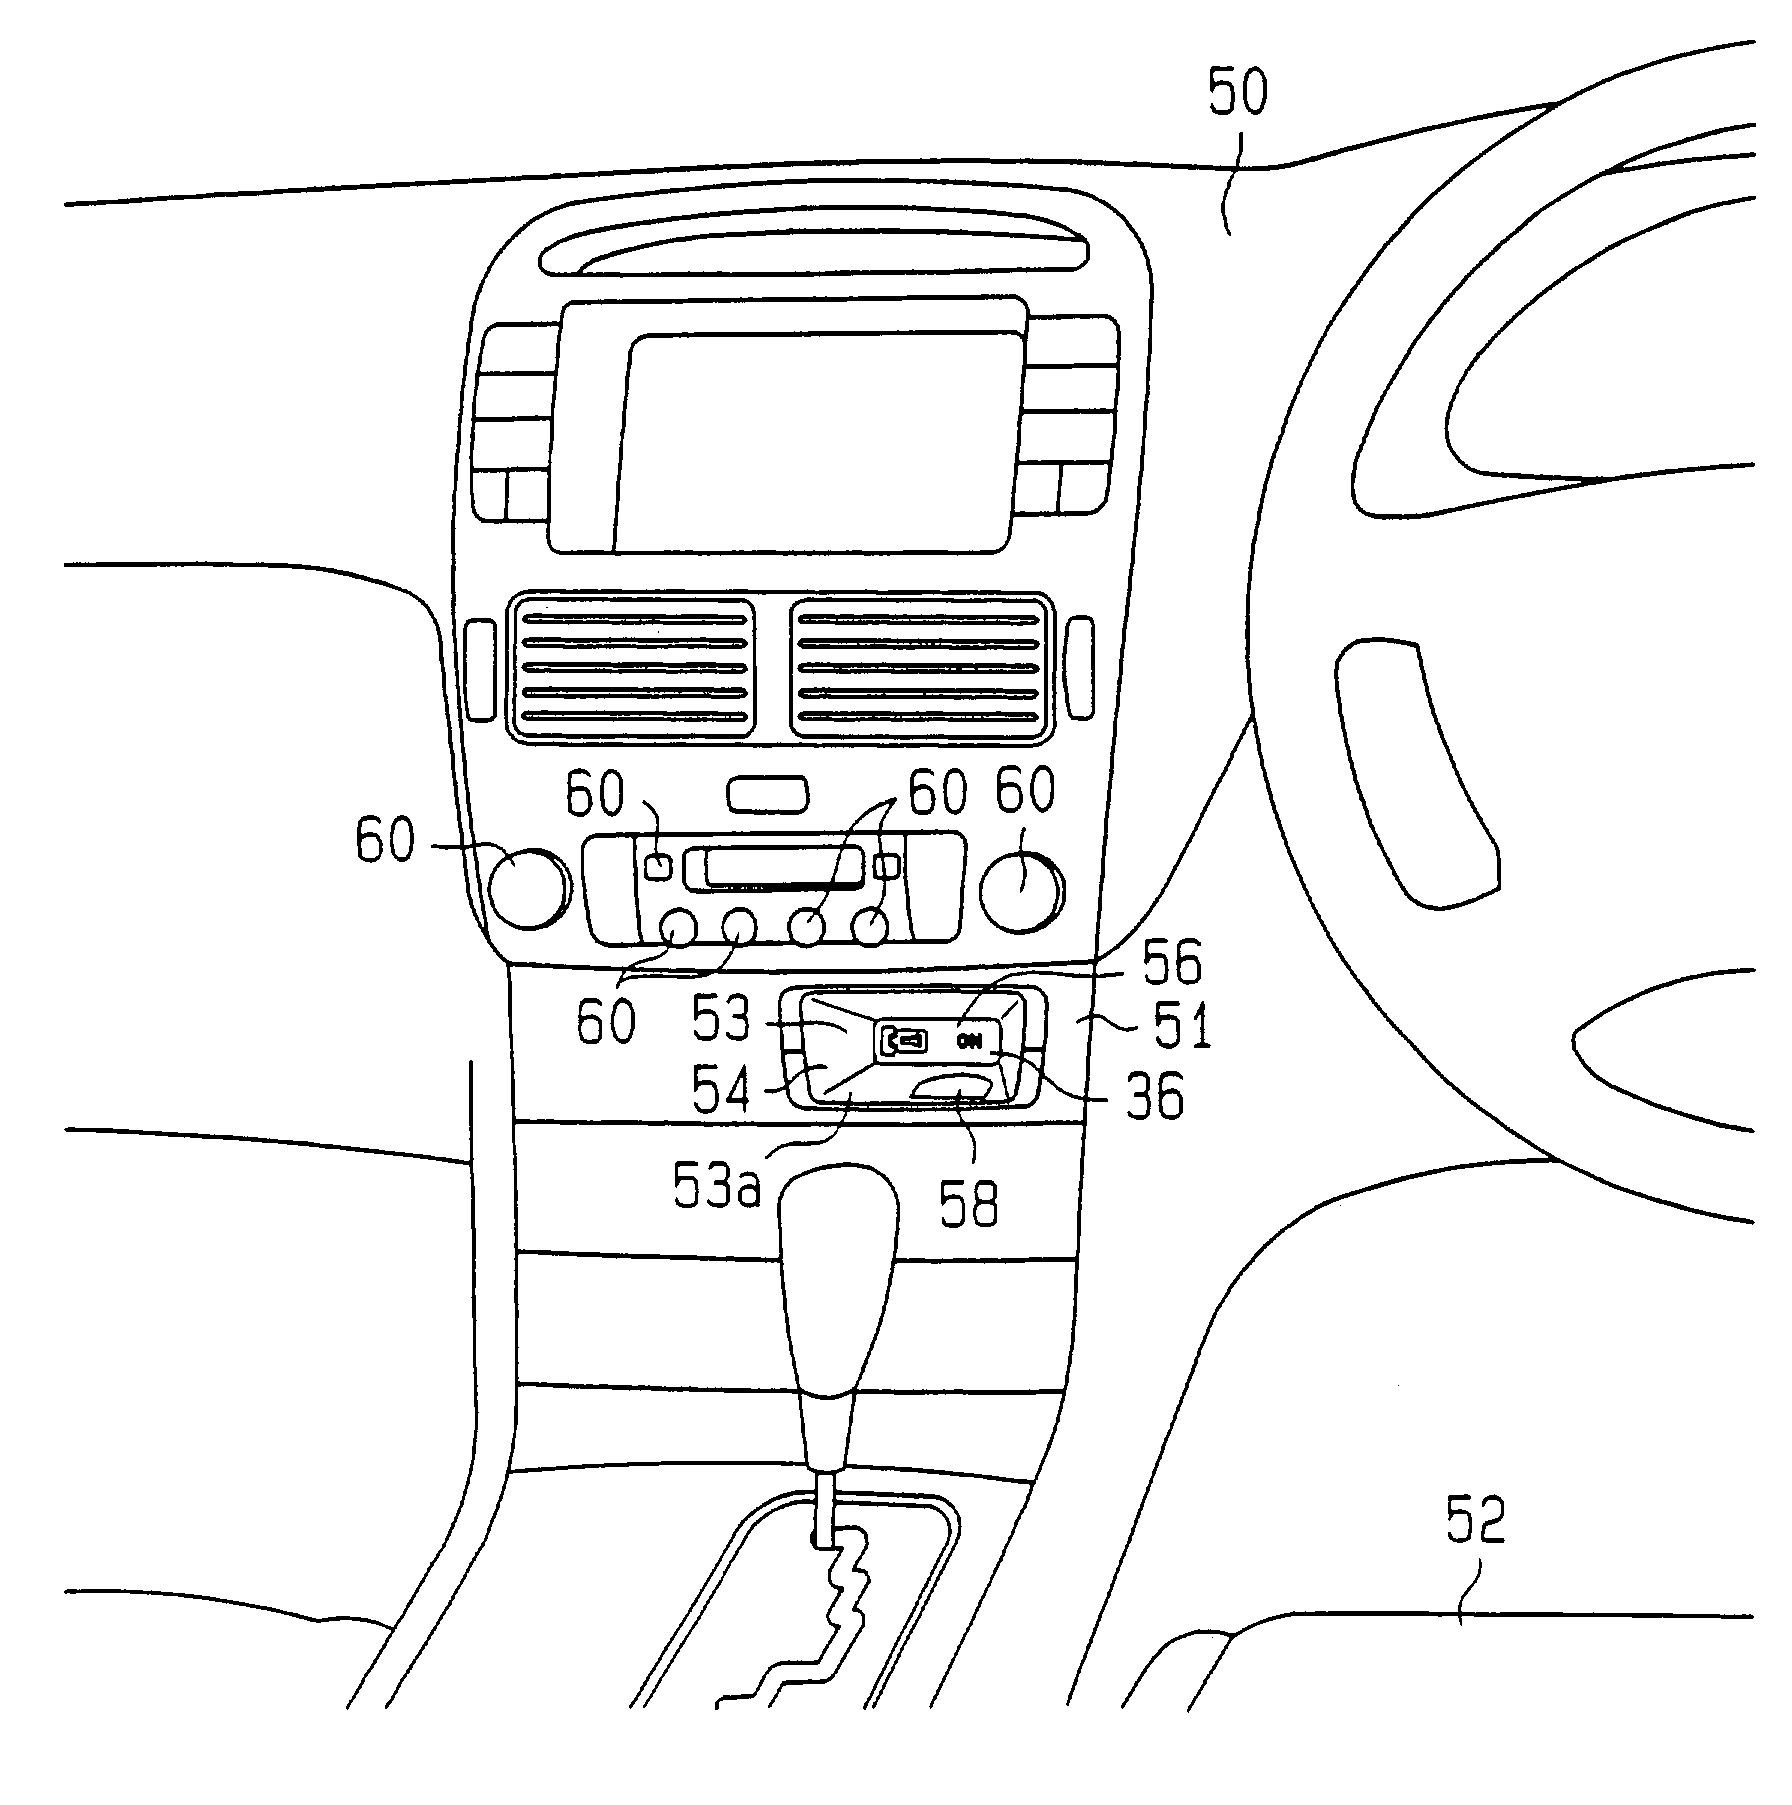 Vehicle engine starting apparatus